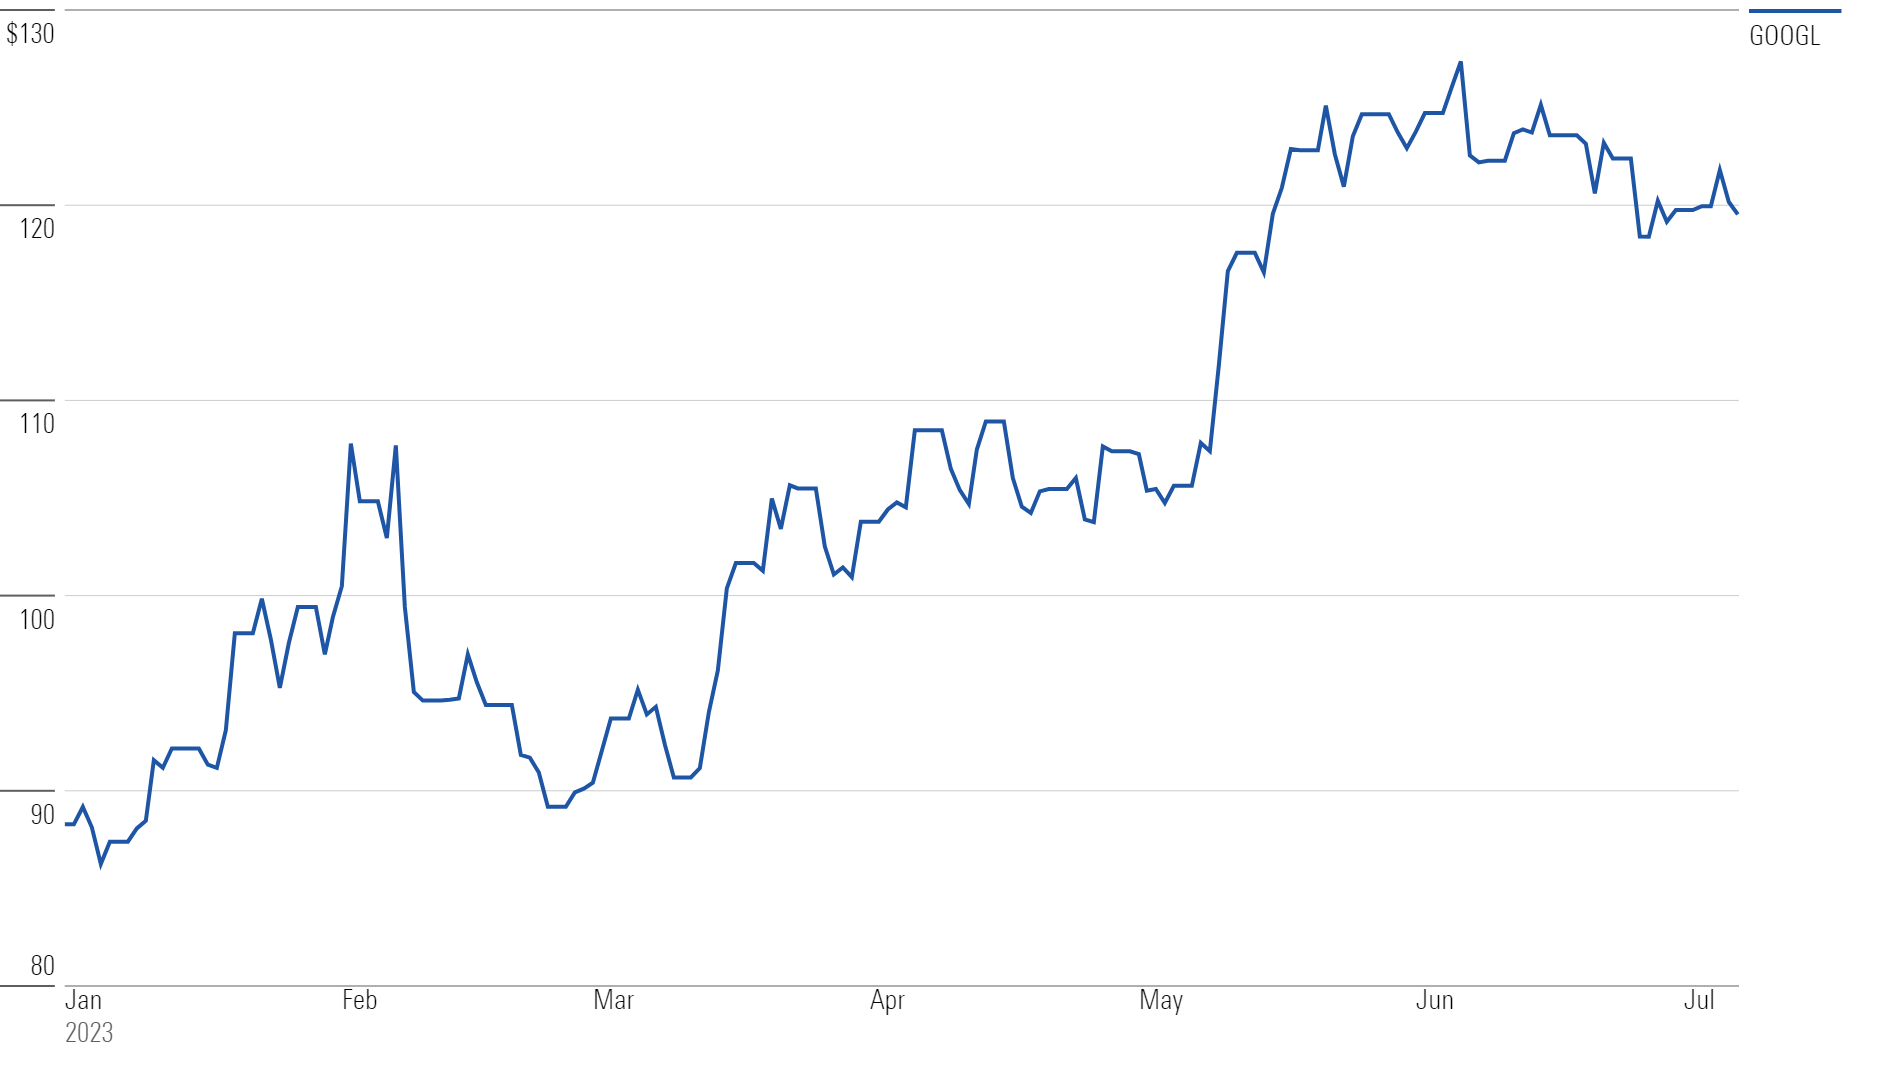 Alphabet (GOOGL) Stock Price Chart